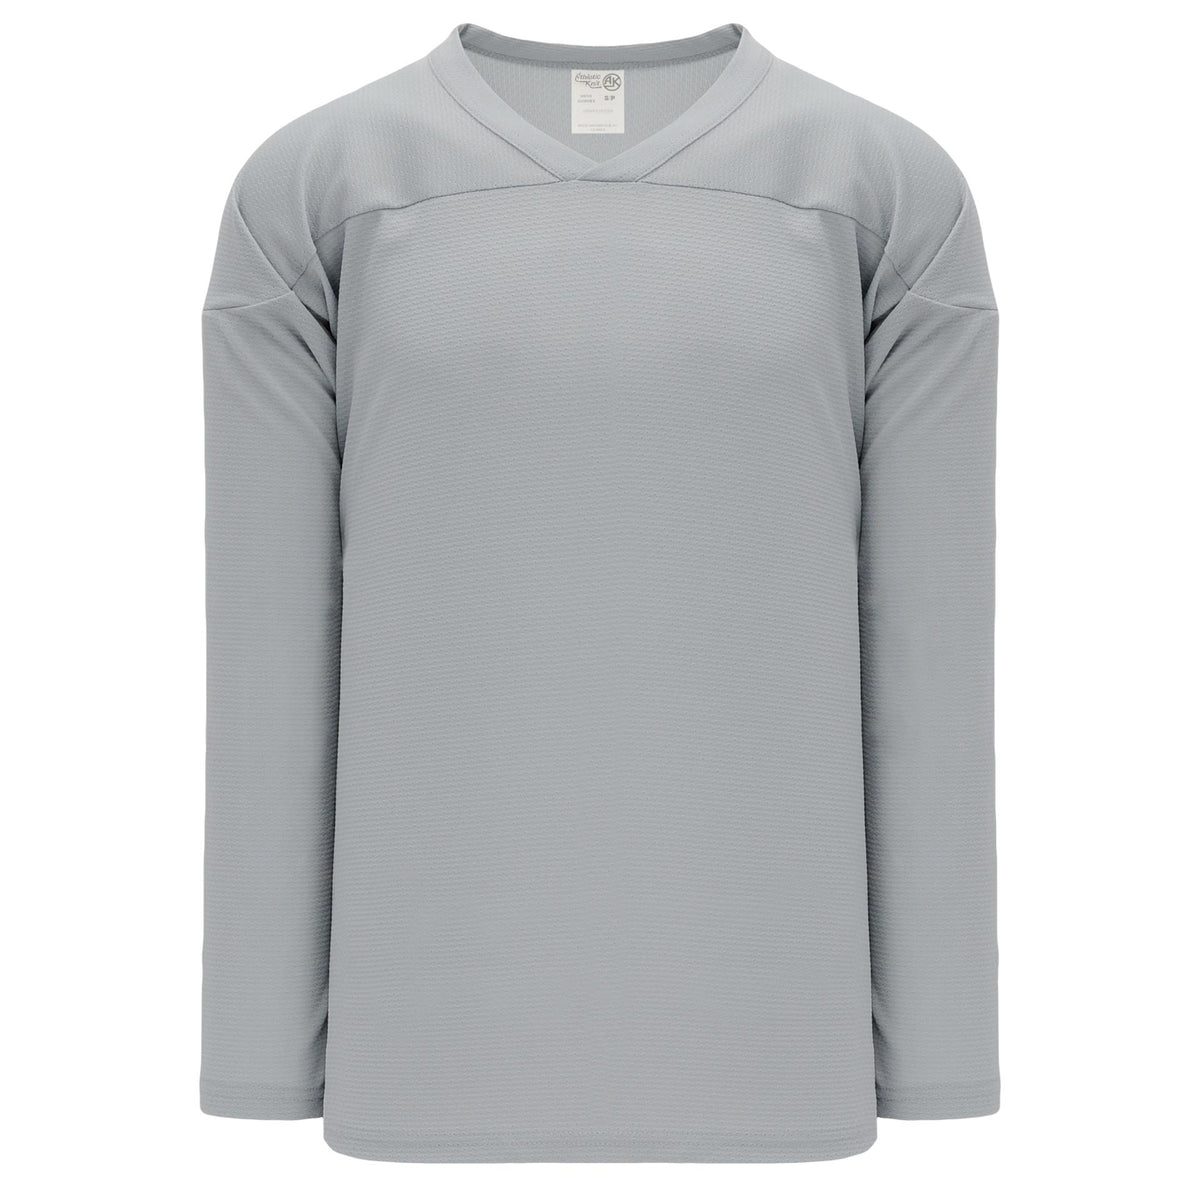 H6000-012 Grey Practice Style Blank Hockey Jerseys –